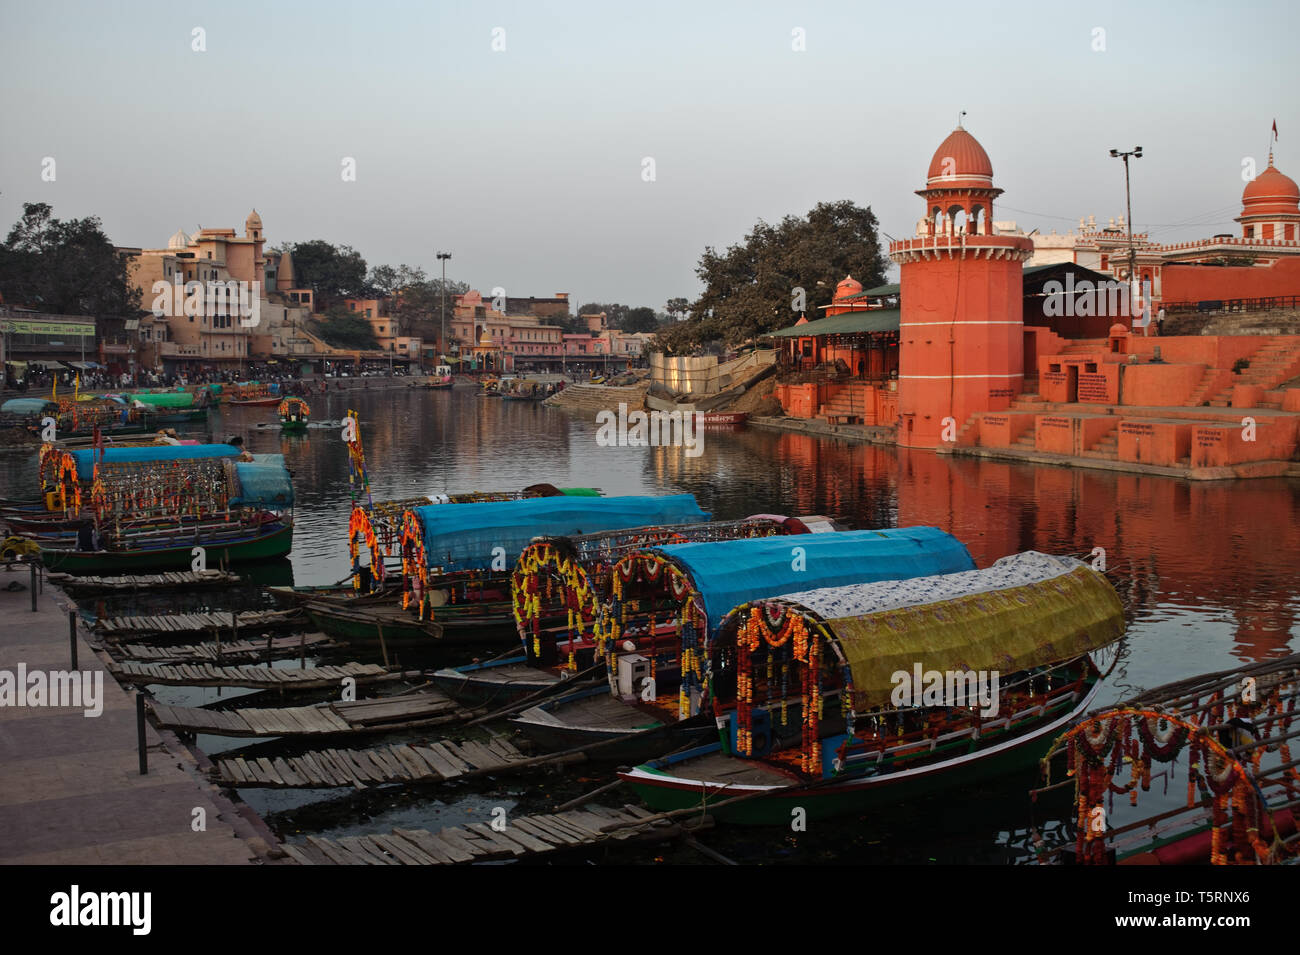 Boats for tourists, Mandakini river, Chitrakoot ( India) Stock Photo